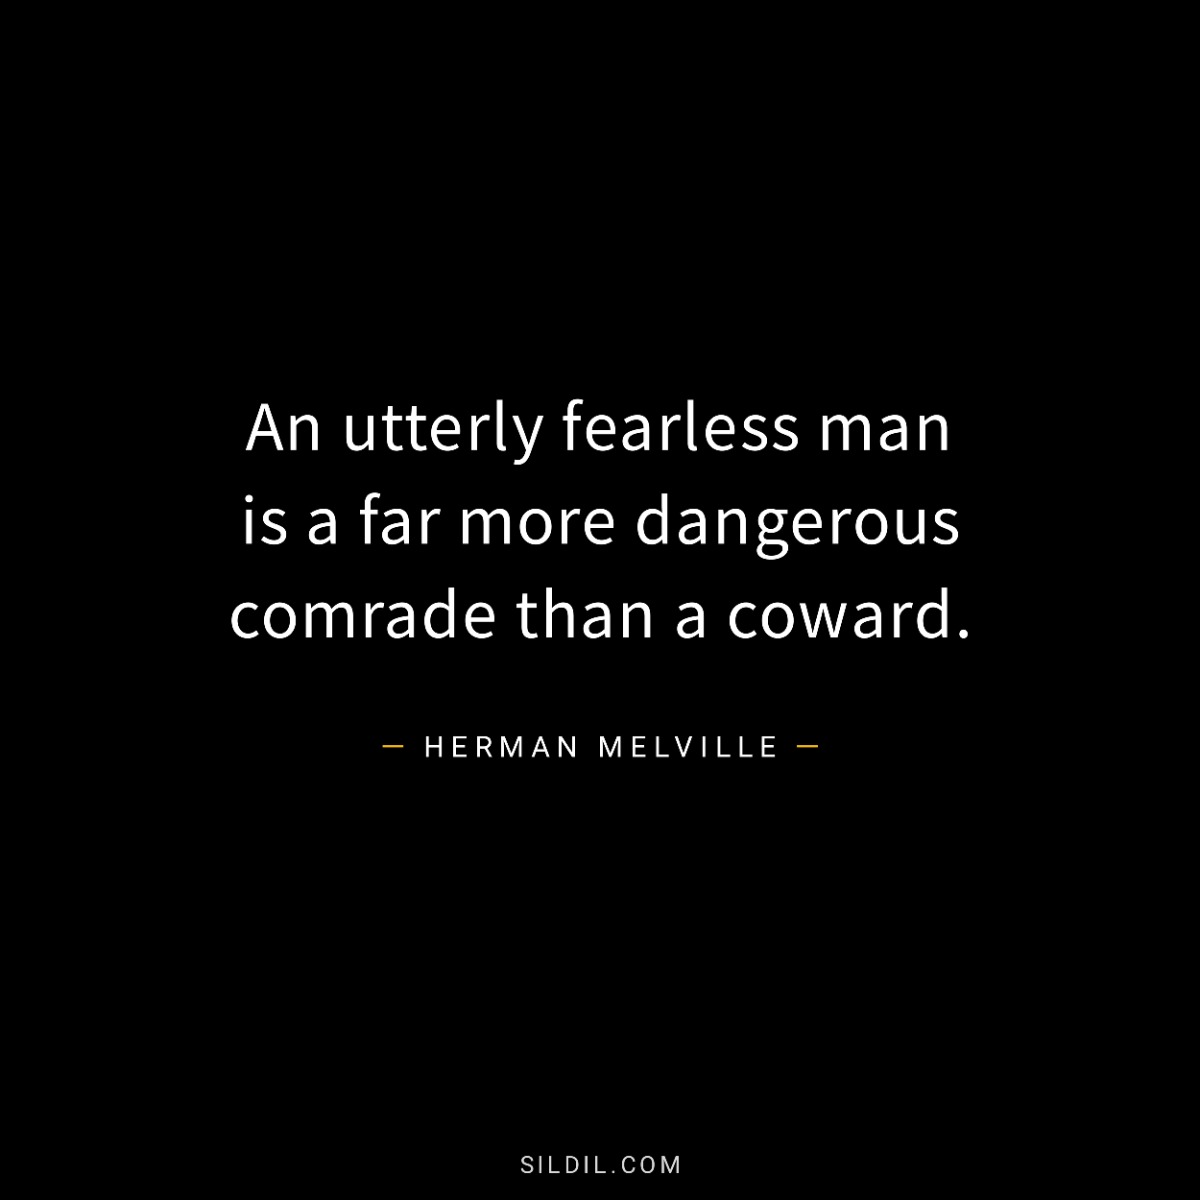 An utterly fearless man is a far more dangerous comrade than a coward.